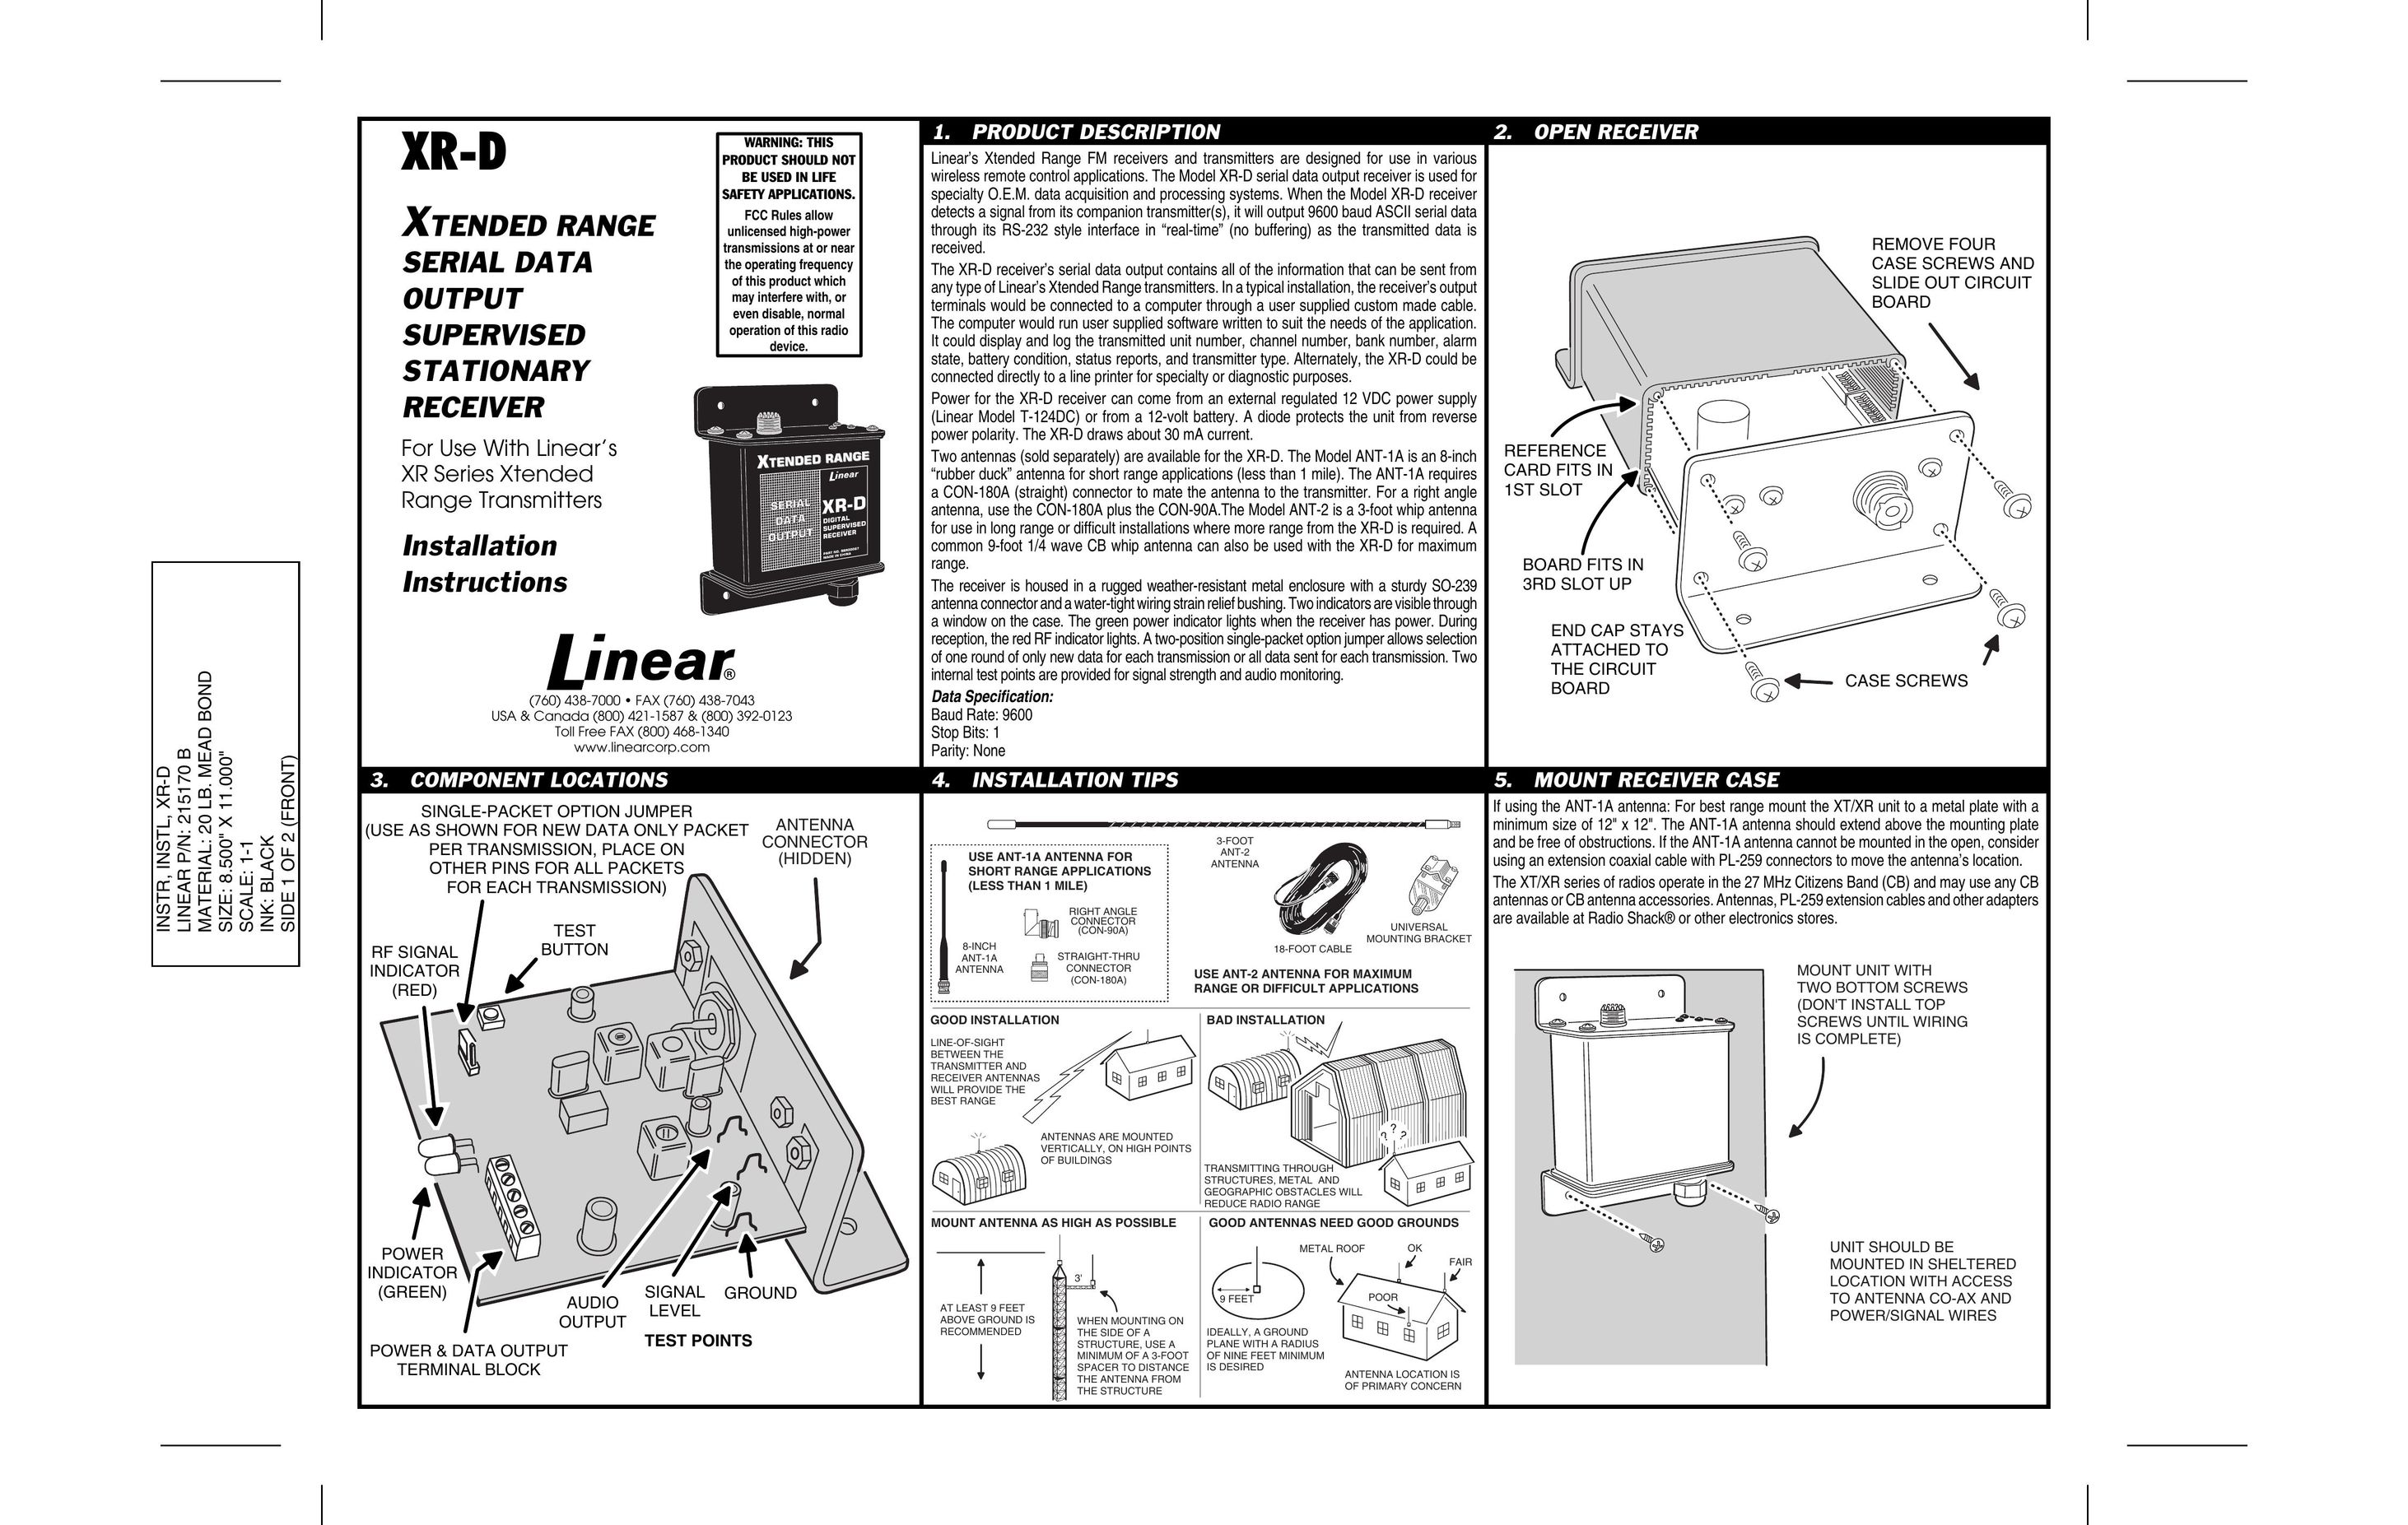 Linear XR-D Satellite Radio User Manual